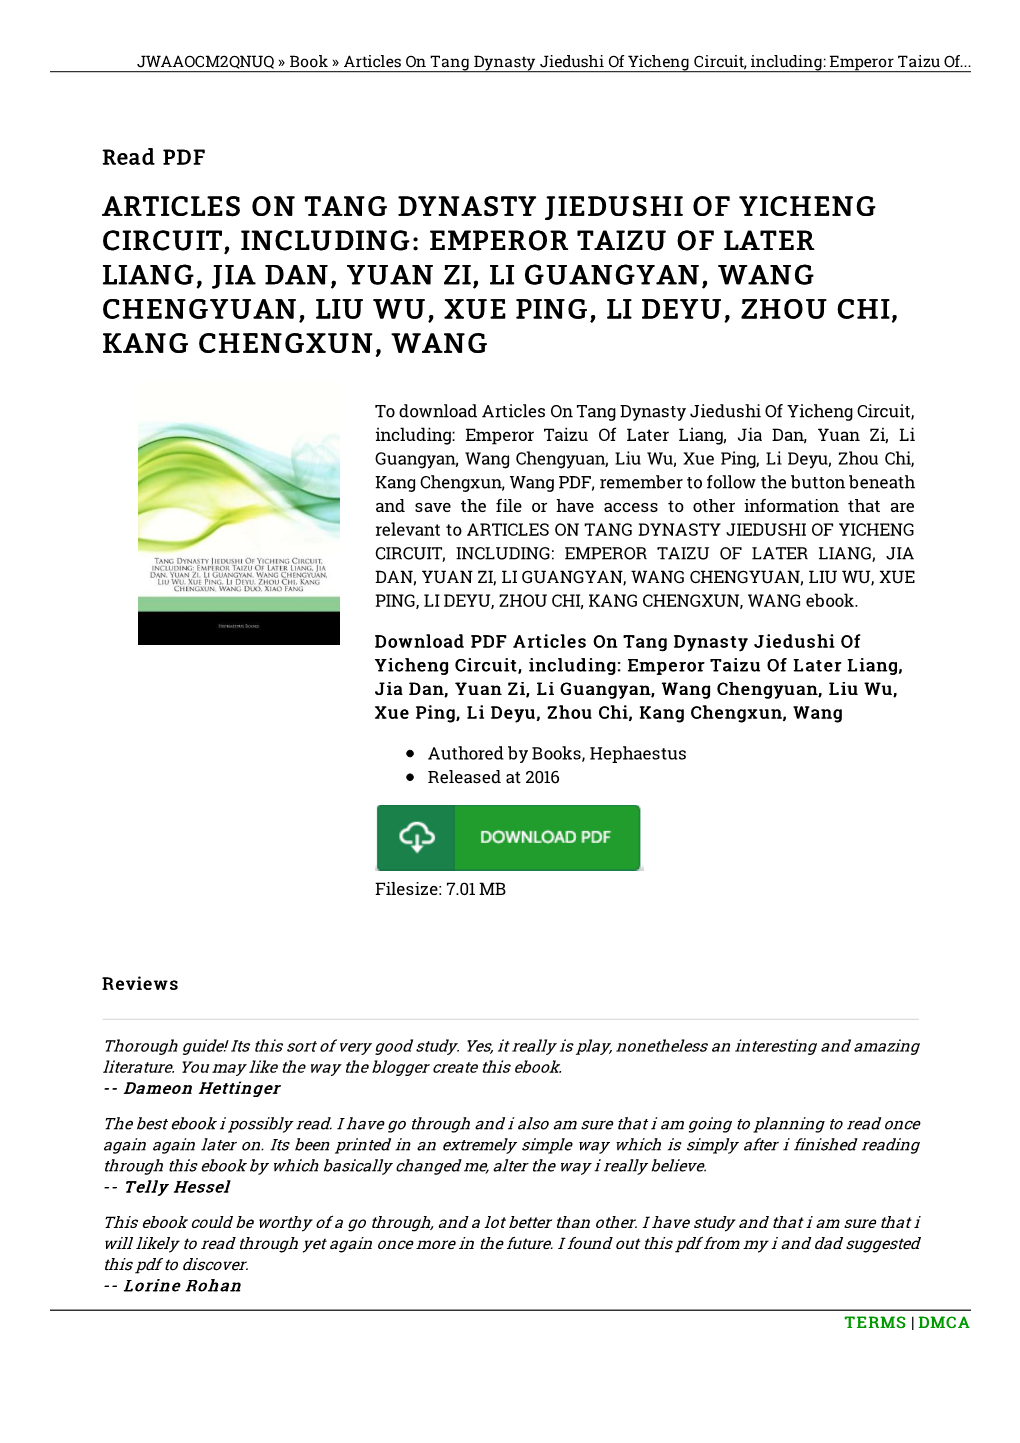 Download PDF / Articles on Tang Dynasty Jiedushi of Yicheng Circuit